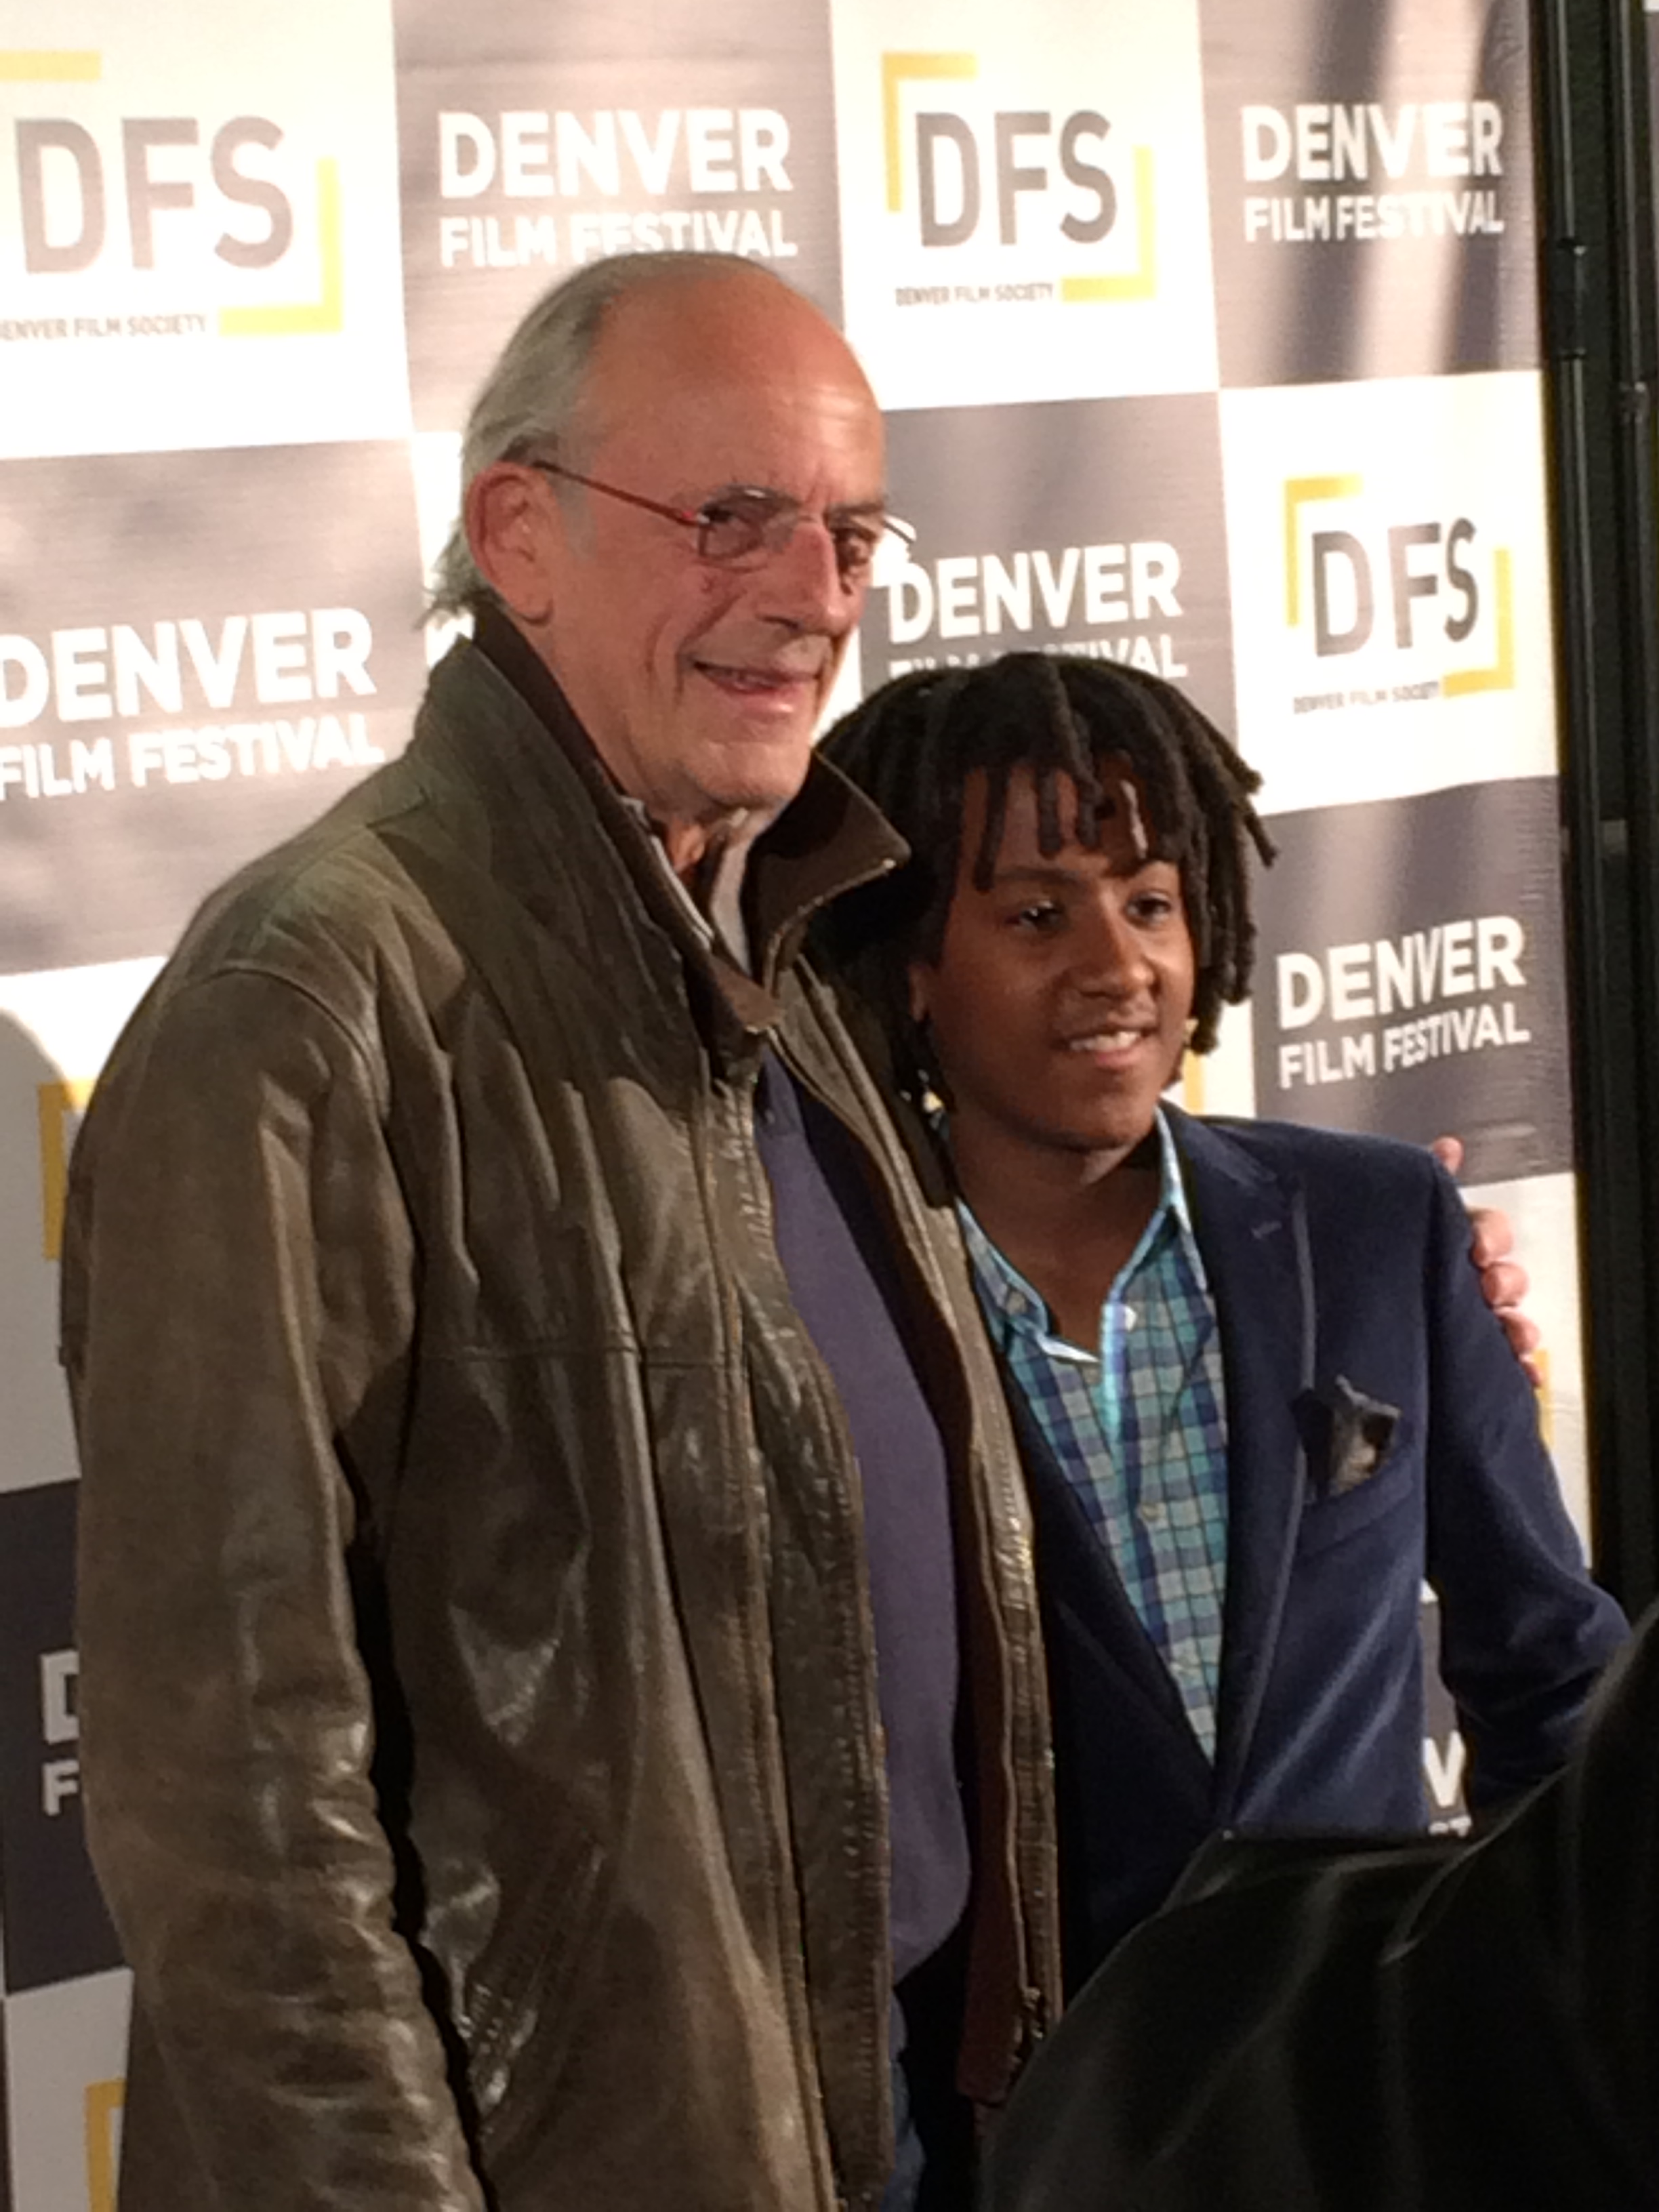 Denver Film Festival Red Carpet with Mr. Lloyd